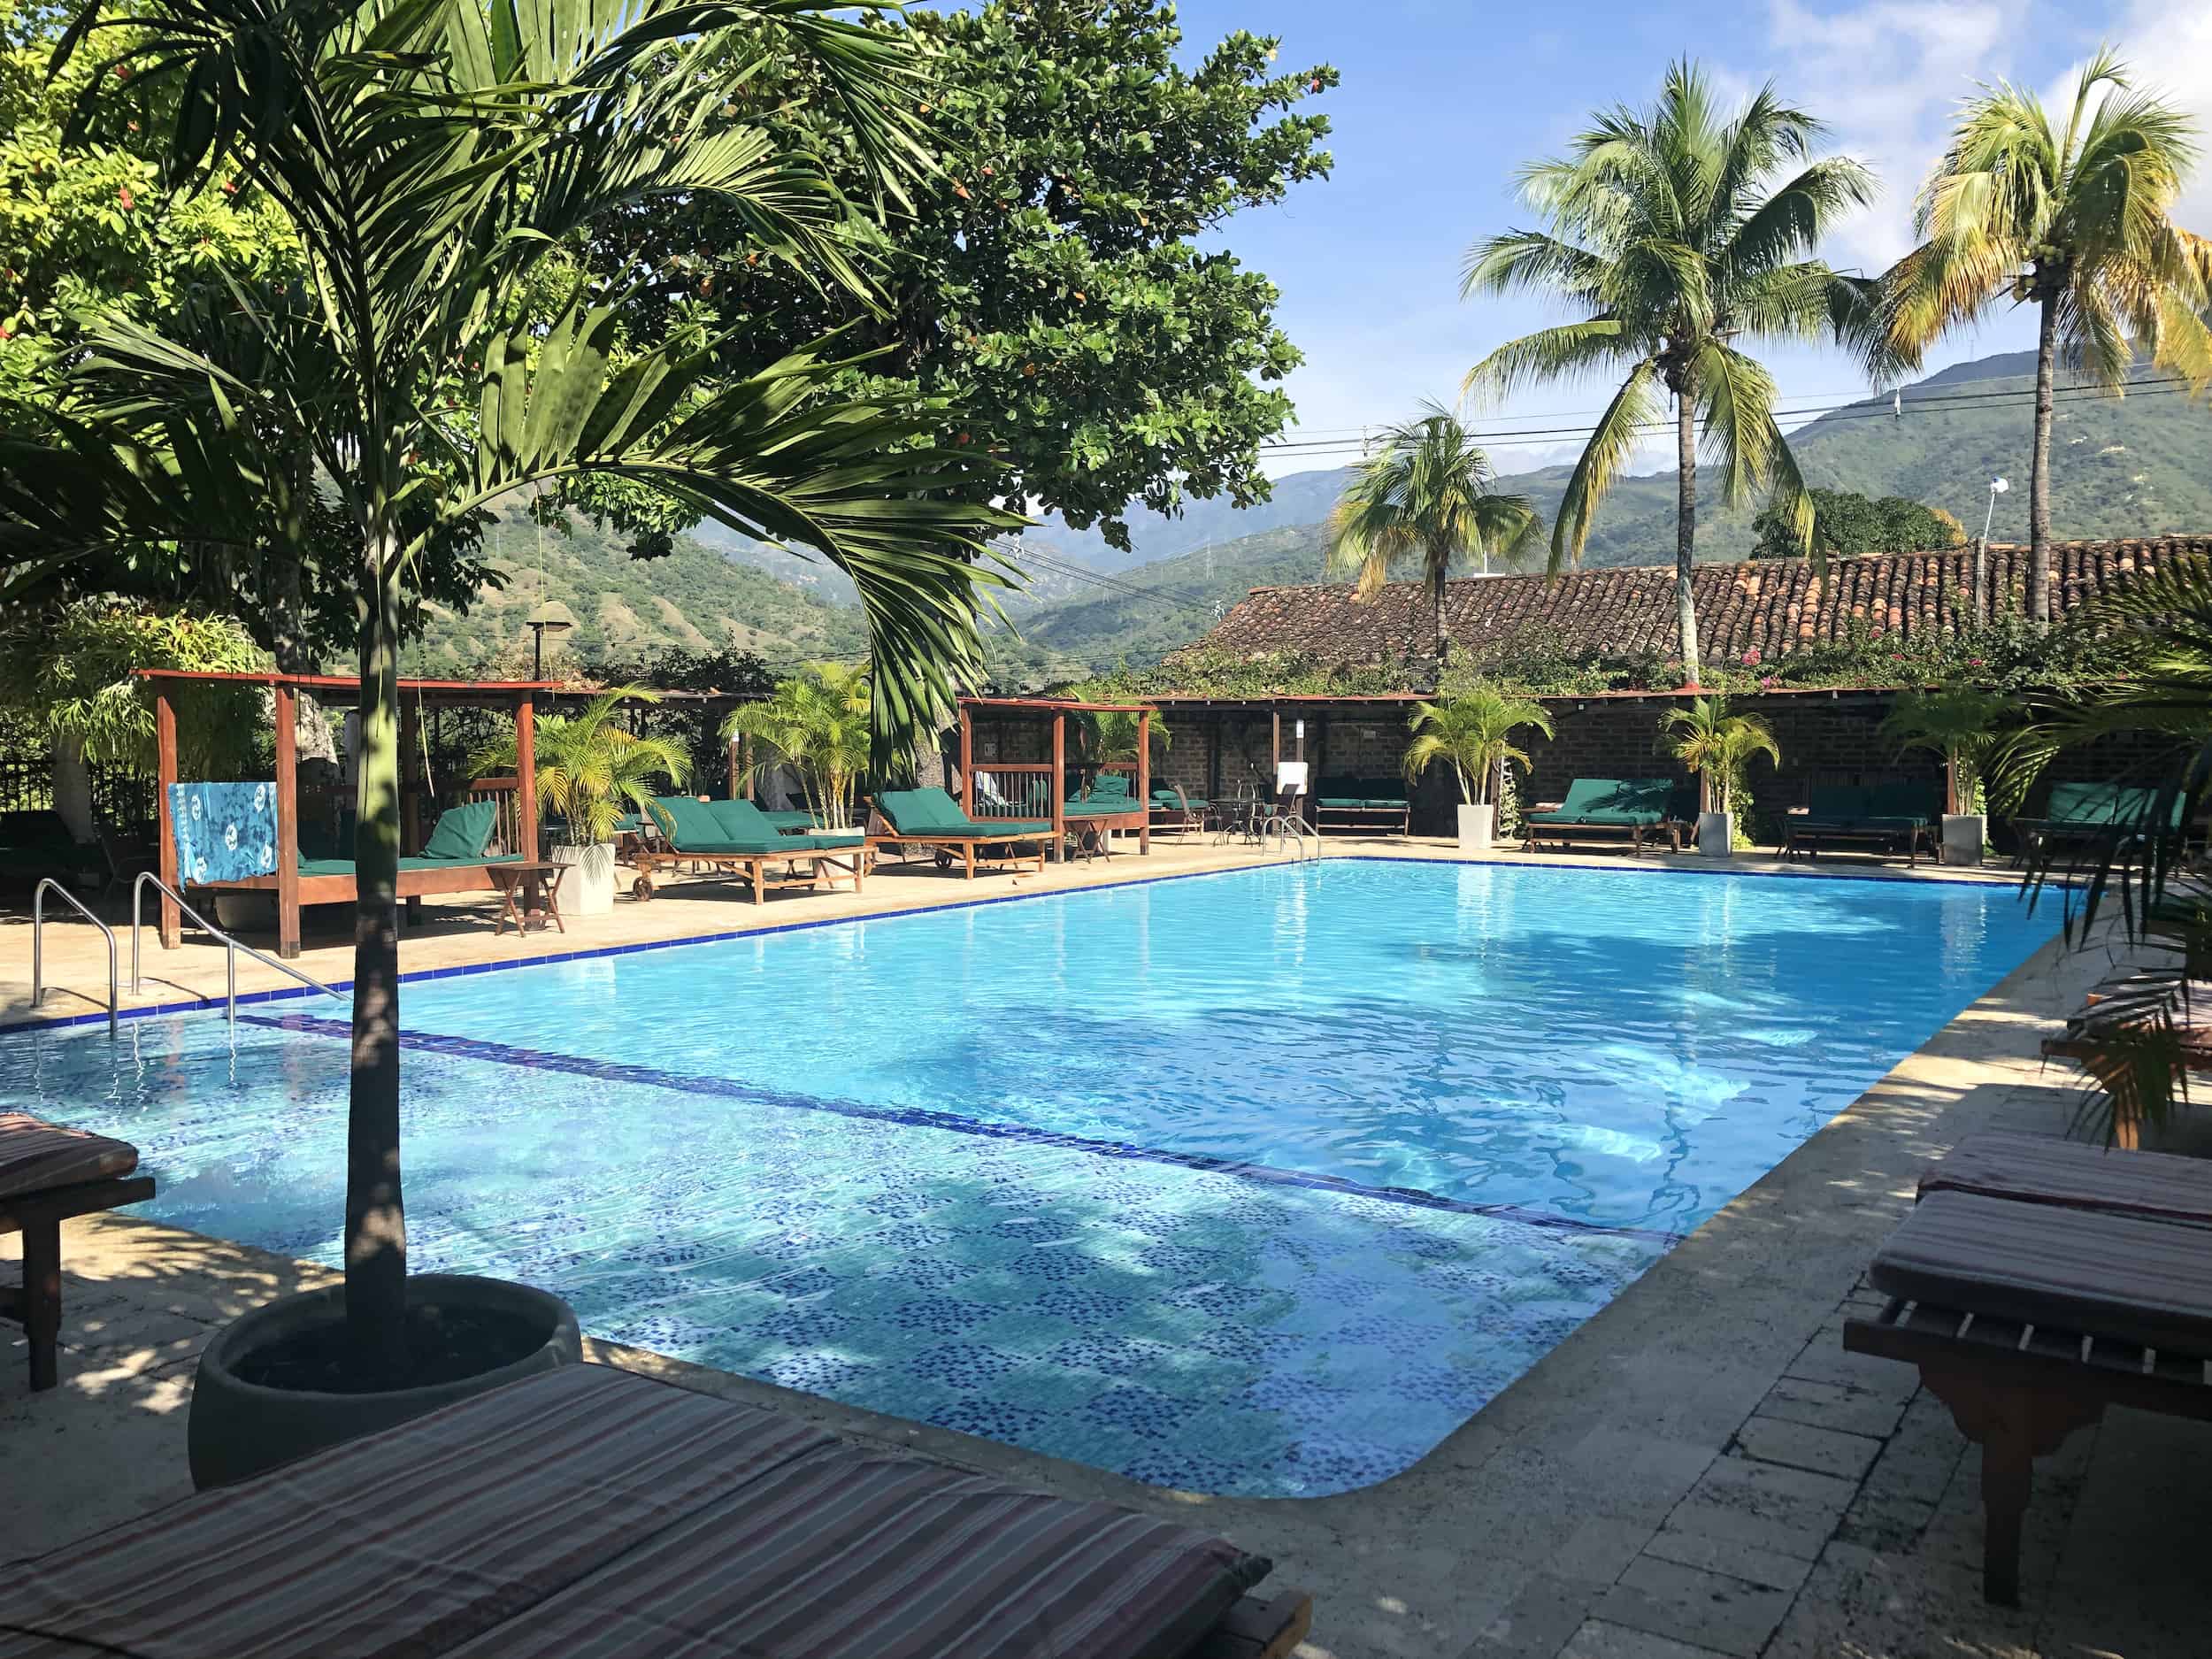 Pool at Hotel Mariscal Robledo in Santa Fe de Antioquia, Colombia